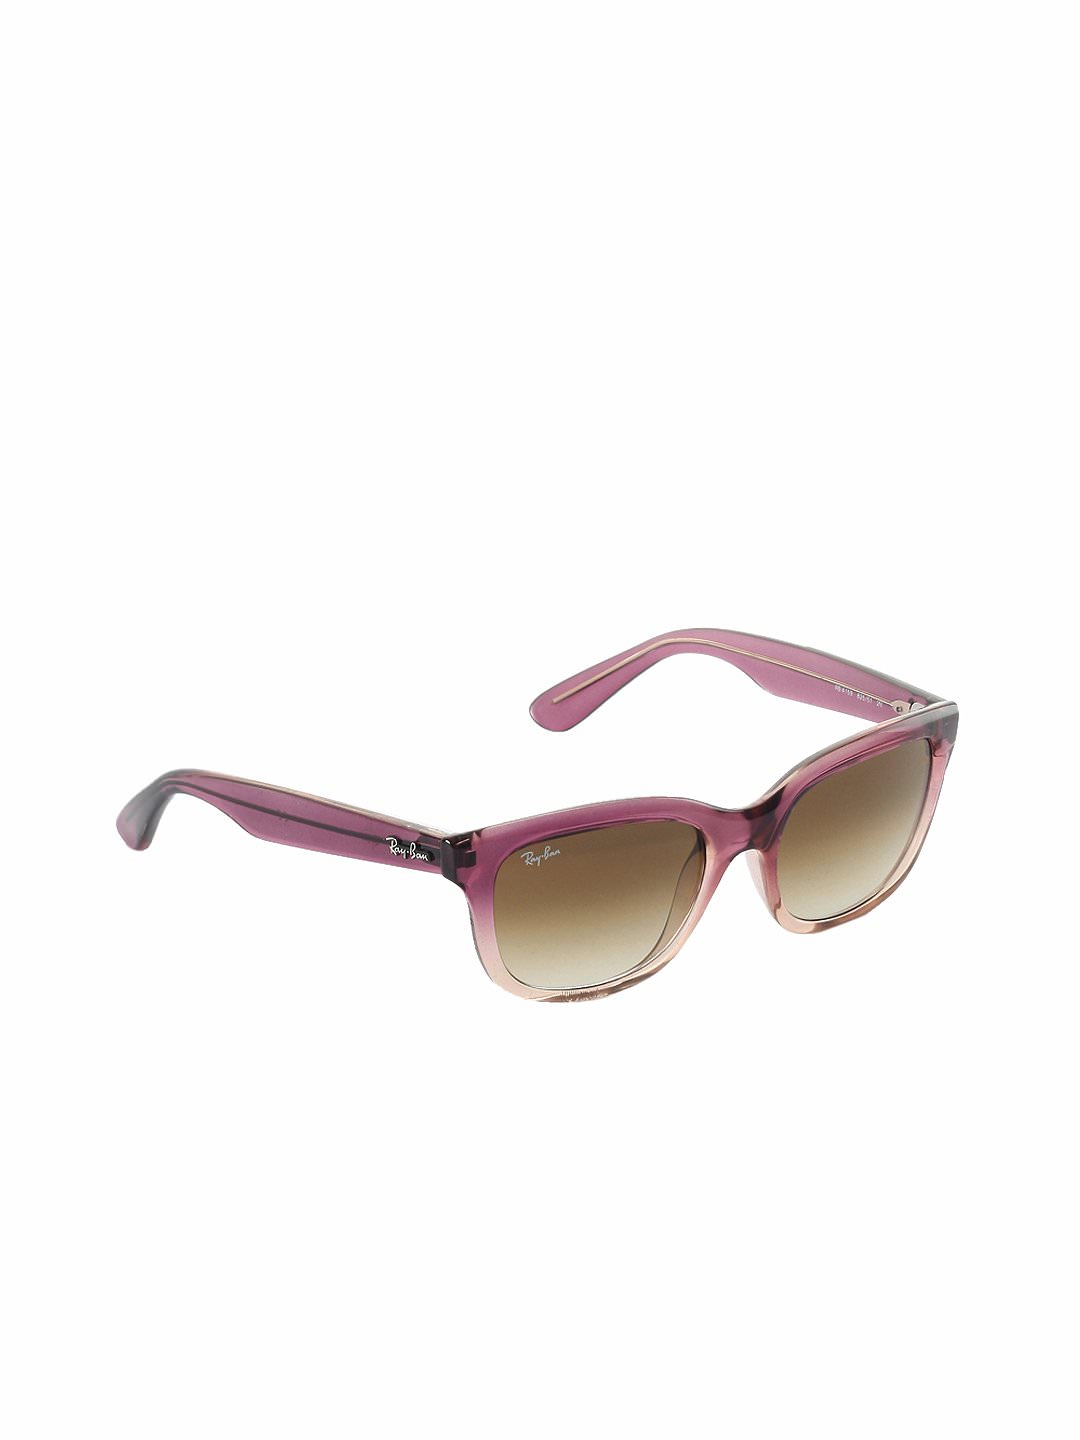 Ray-Ban Unisex High Street Pink Sunglasses